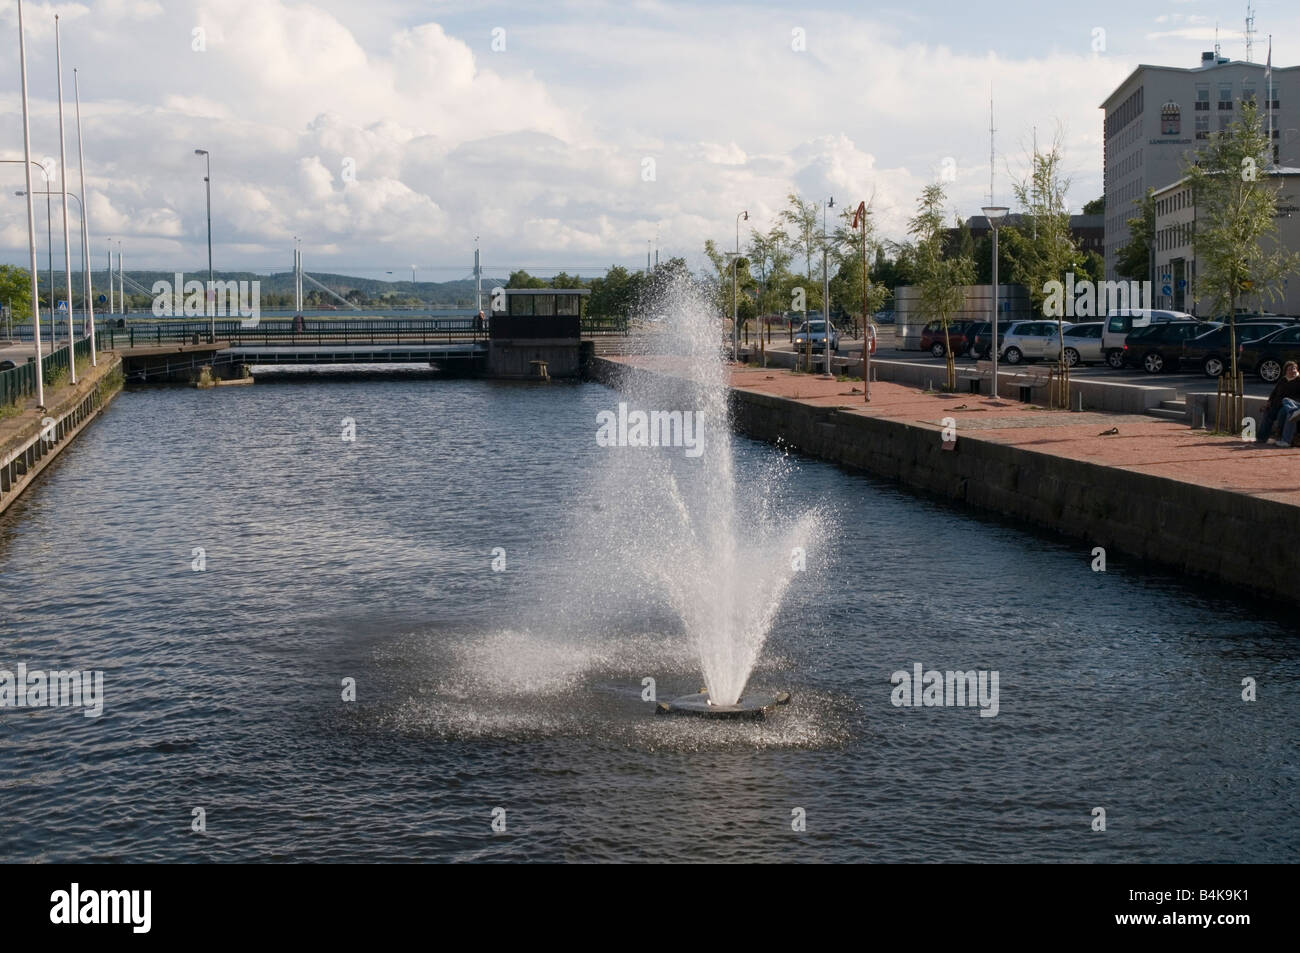 jonkoping sweden swedish town city fountain Stock Photo